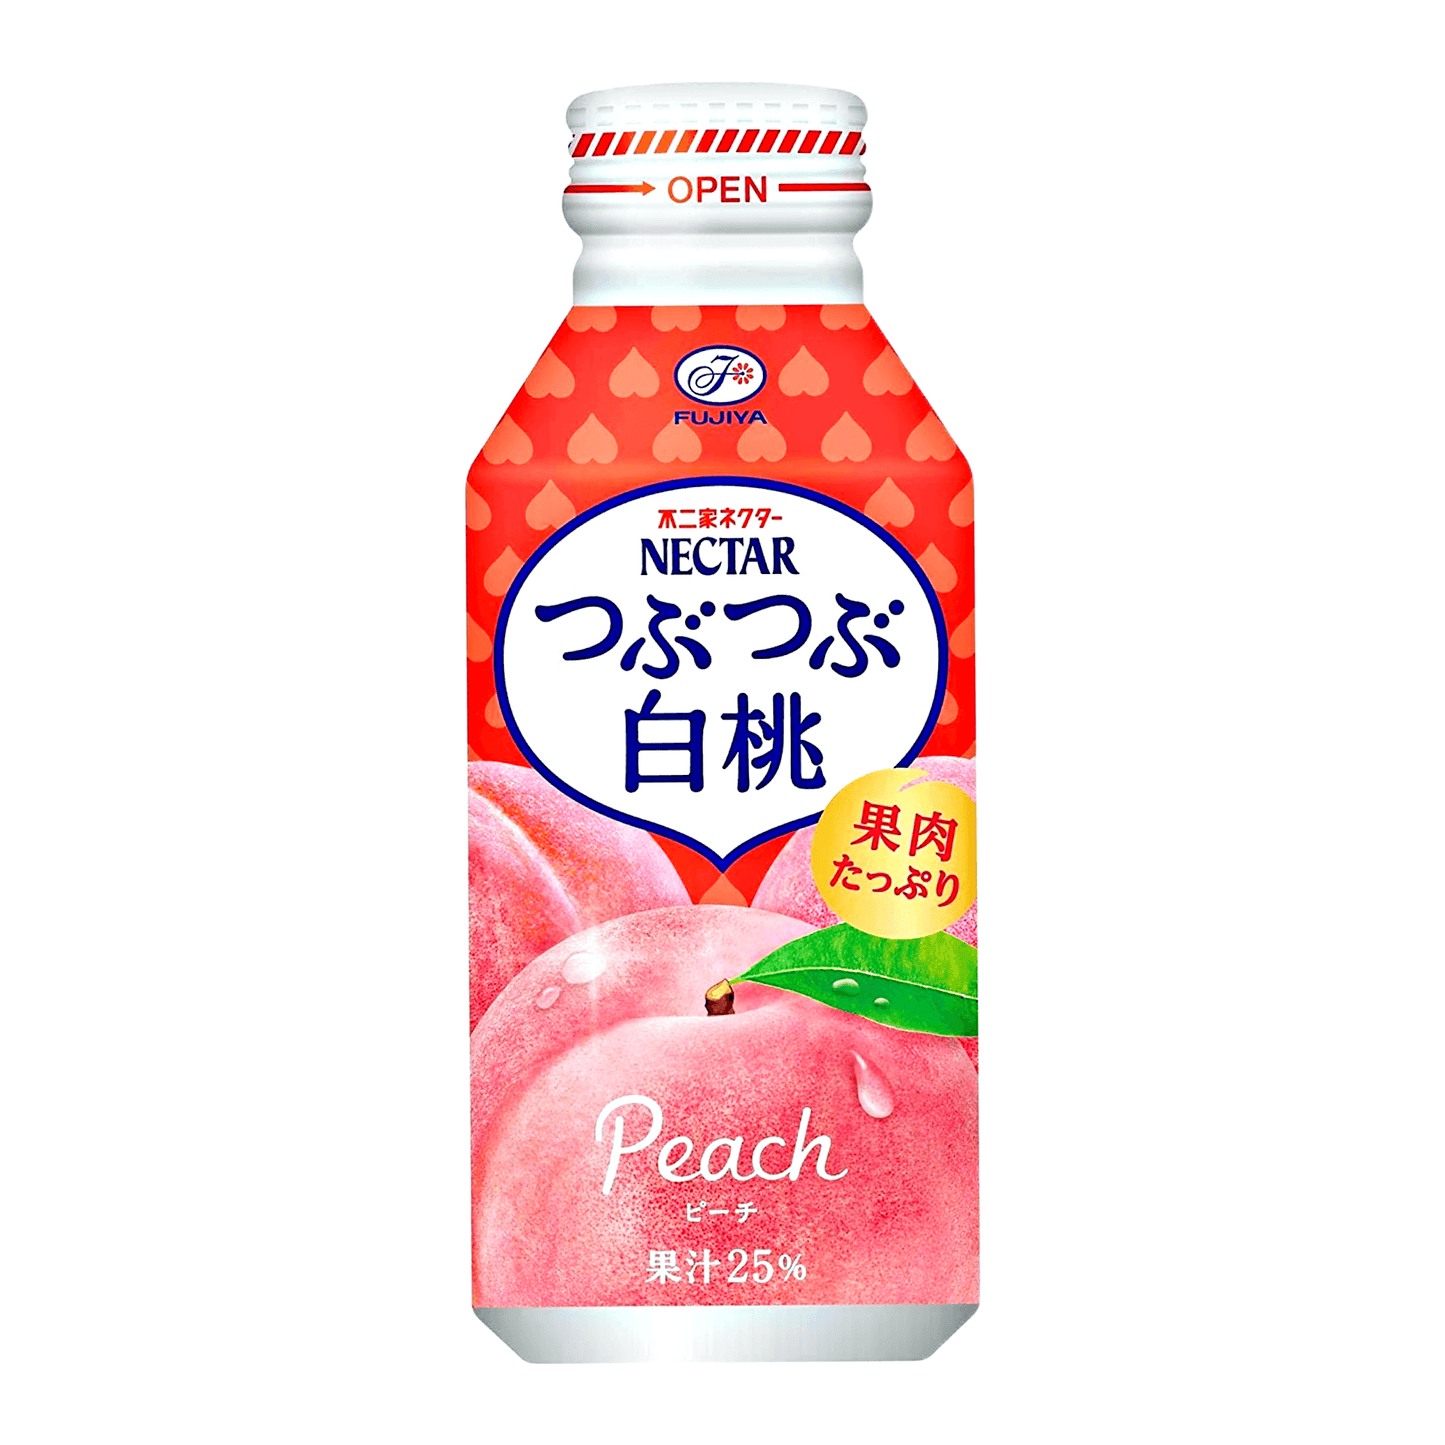 Fujiya Peach Nectar 380ml - The Snacks Box - Asian Snacks Store - The Snacks Box - Korean Snack - Japanese Snack